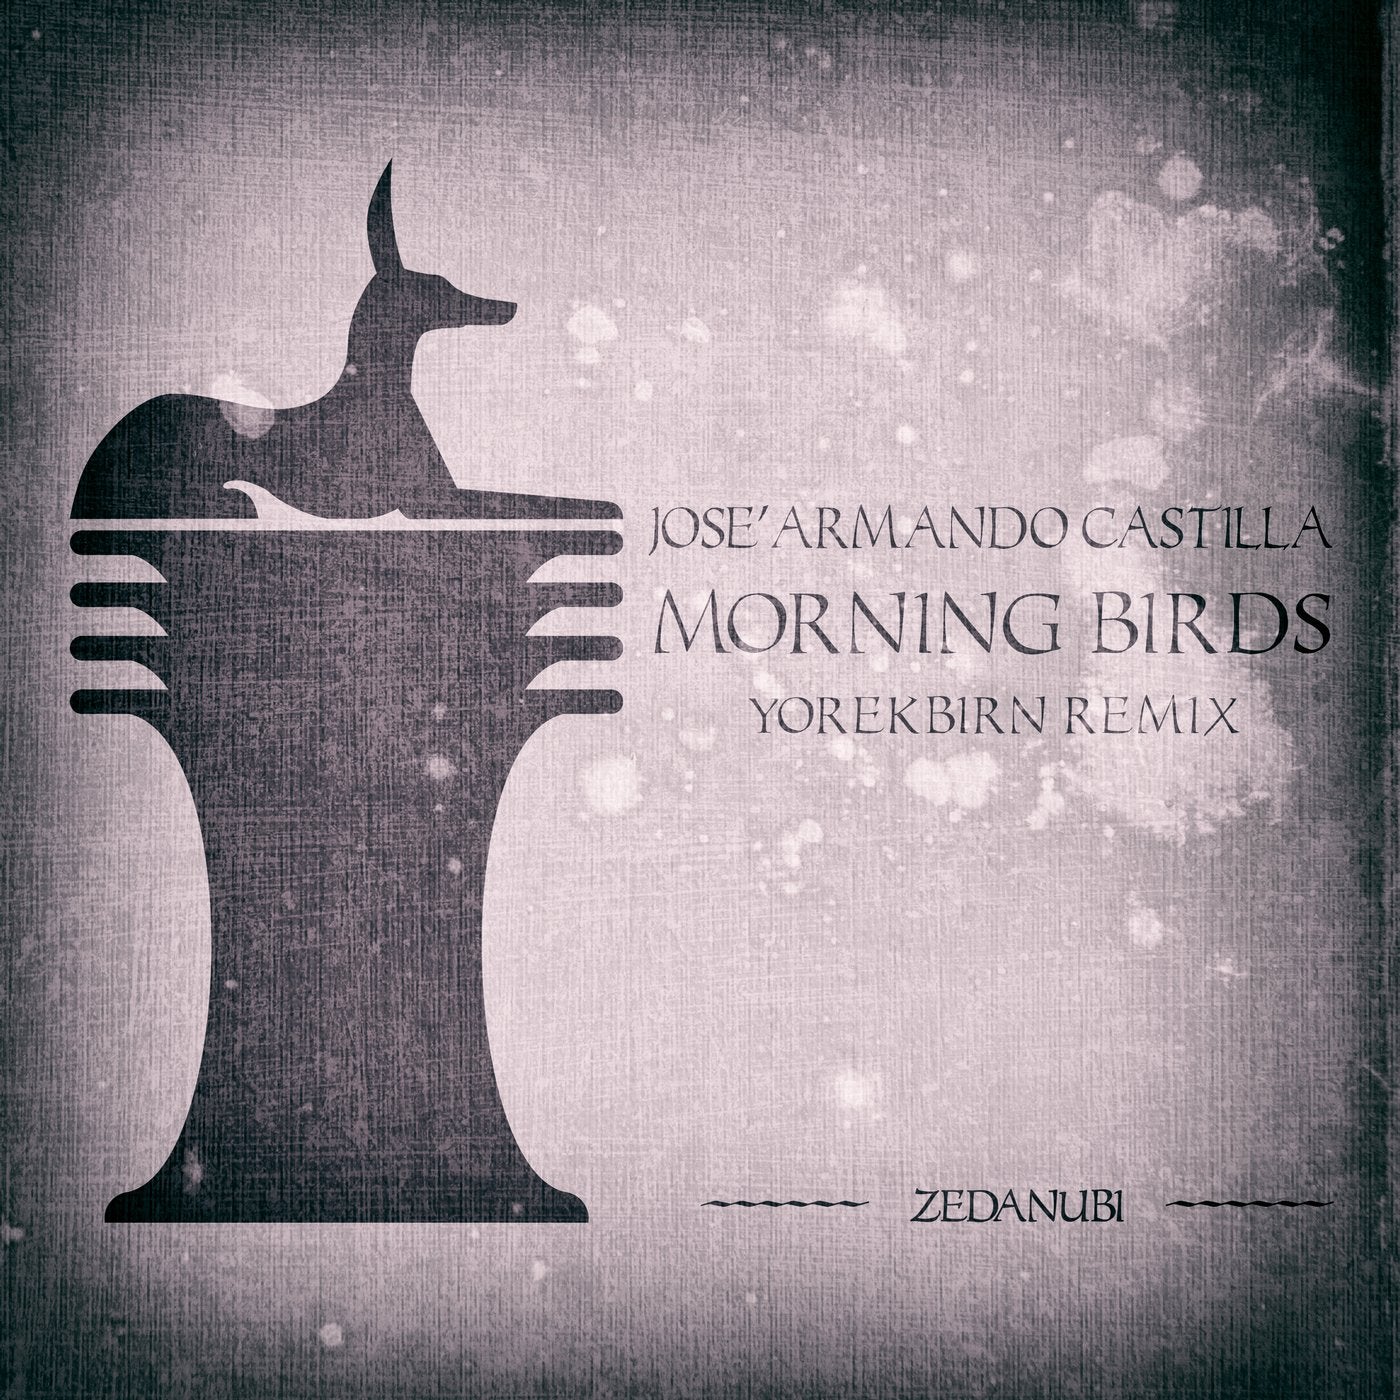 Morning Birds (Yorekbirn Remix)